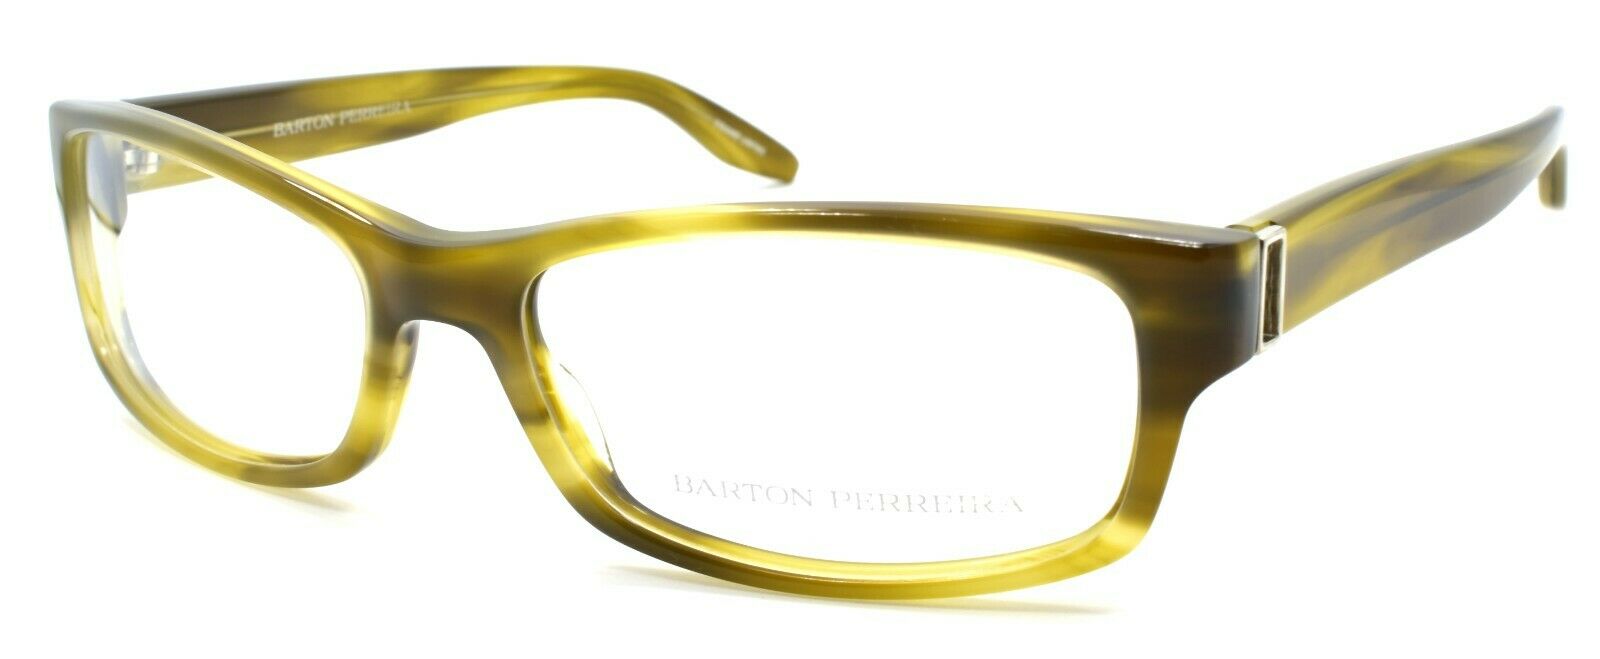 1-Barton Perreira The Associate SOT Unisex Glasses Frames 56-17-136 Olive Tortoise-672263039822-IKSpecs